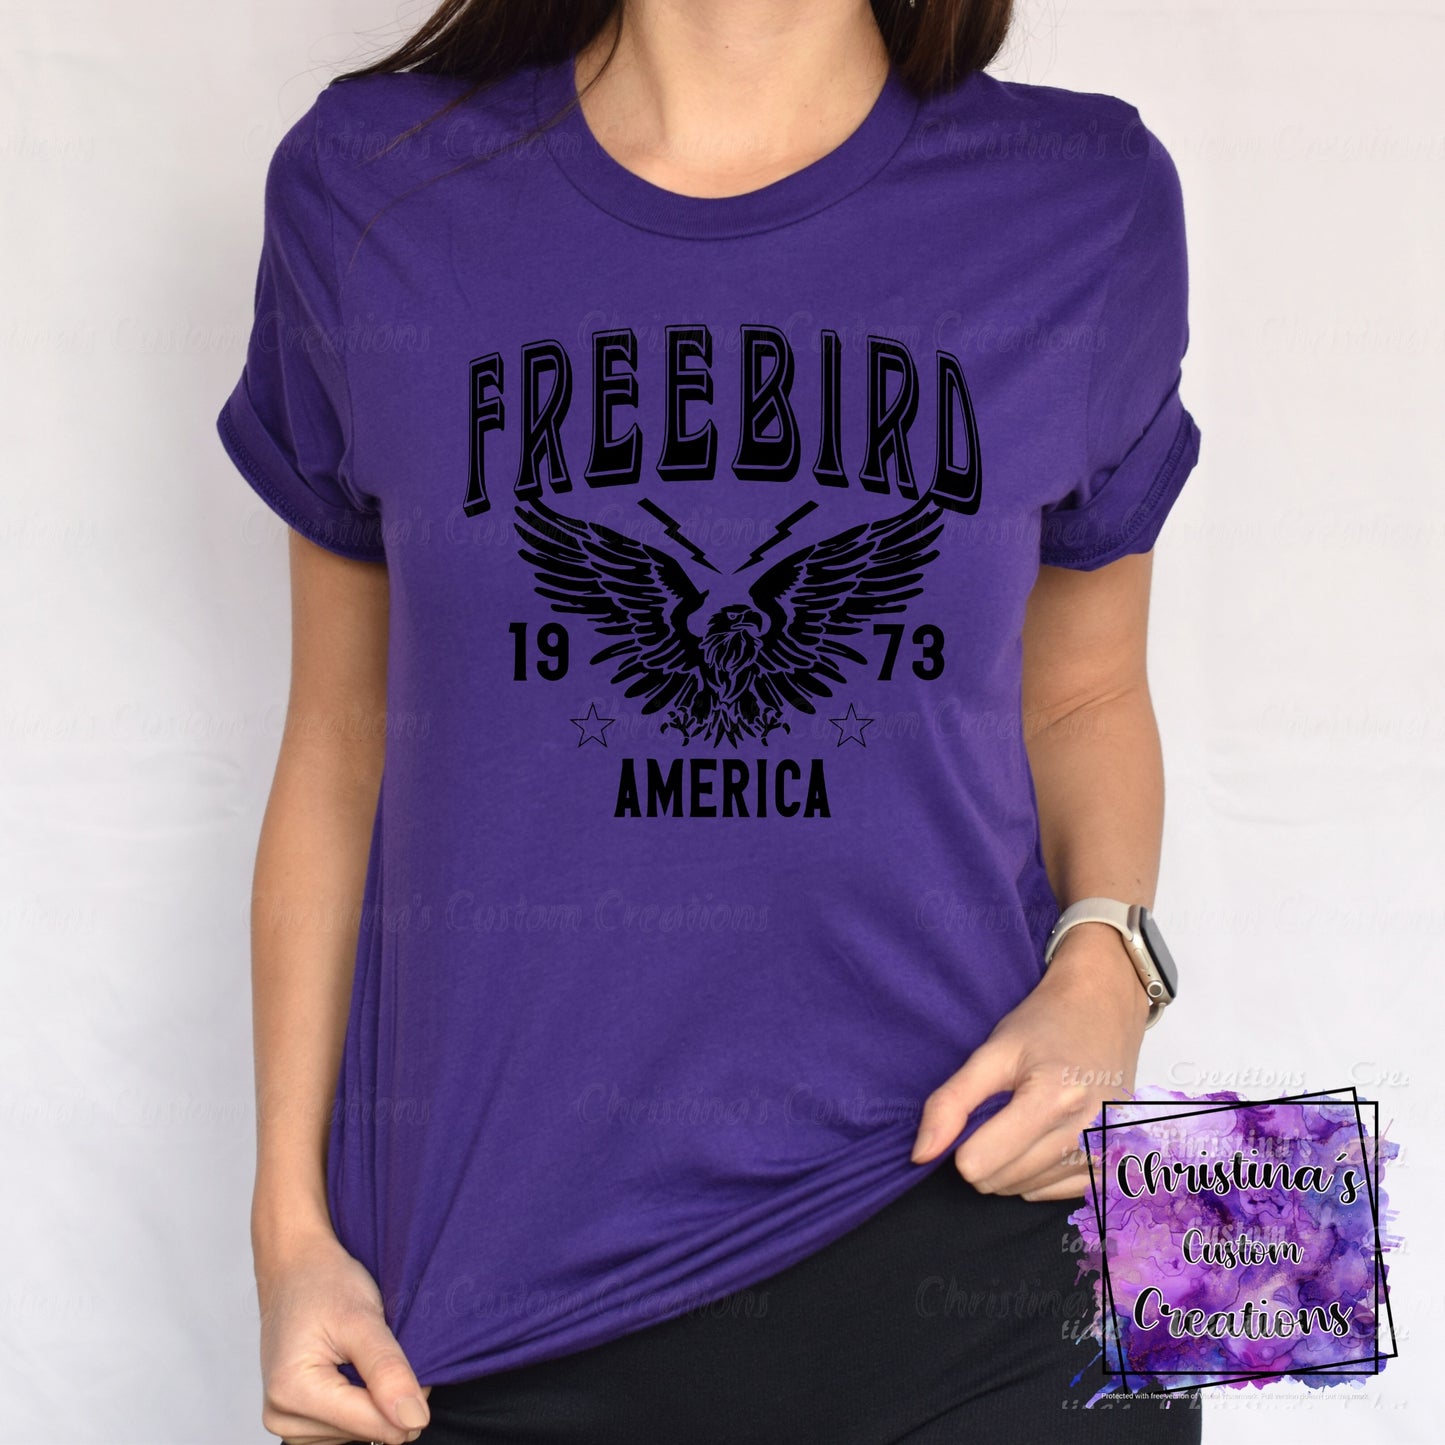 Free Bird T-Shirt | Trendy Rock Music Shirt | Fast Shipping | Super Soft Shirts for Men/Women/Kid's